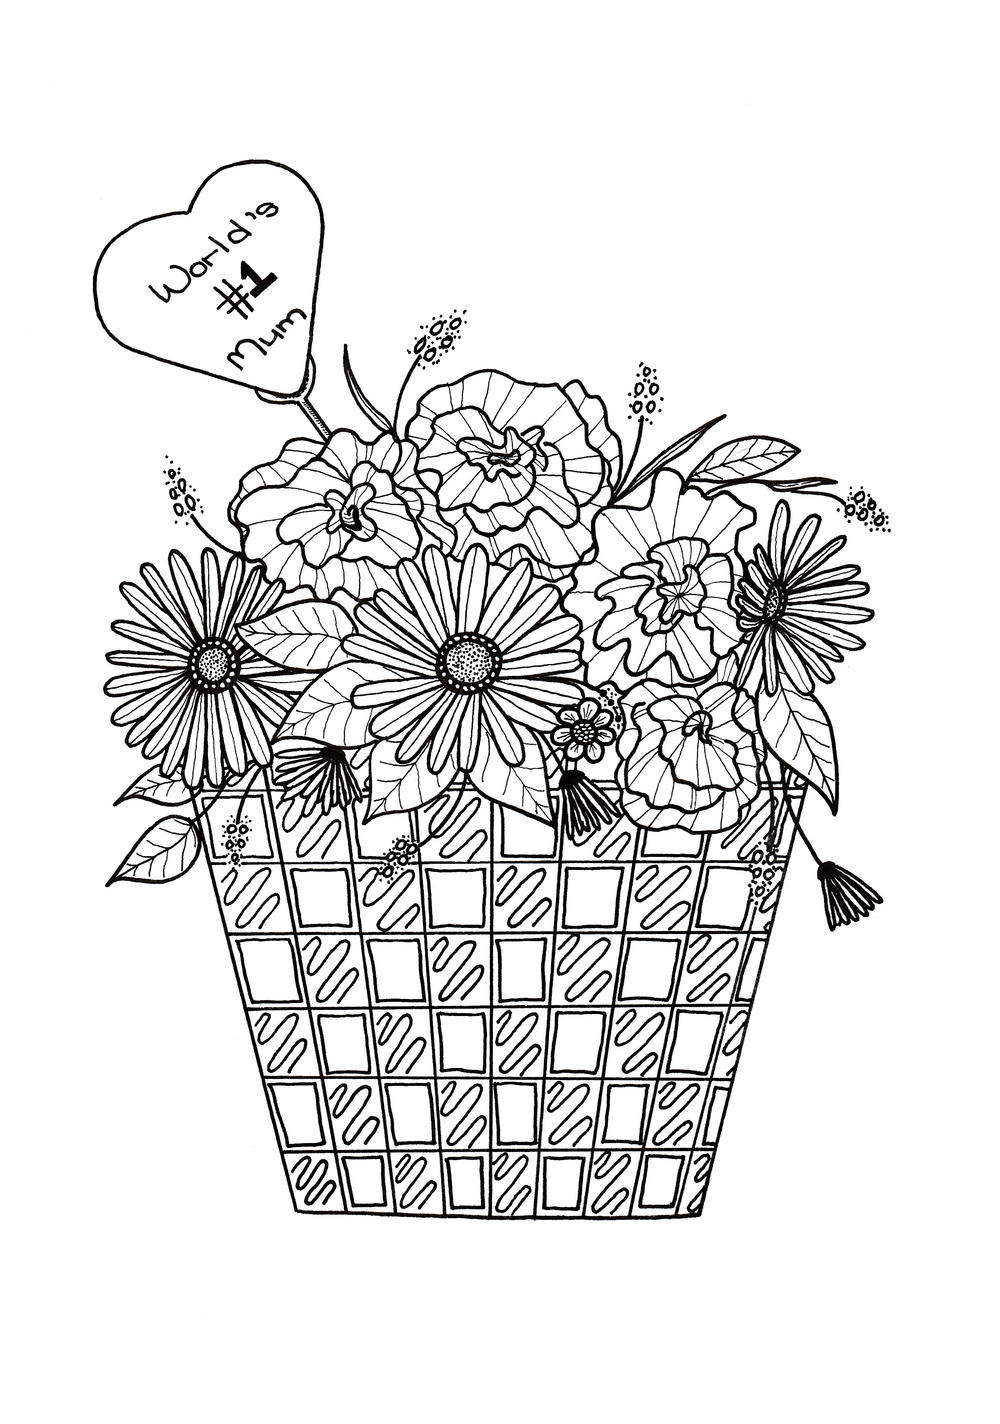 Download Flower Basket Mother's Day Coloring Page | FaveCrafts.com